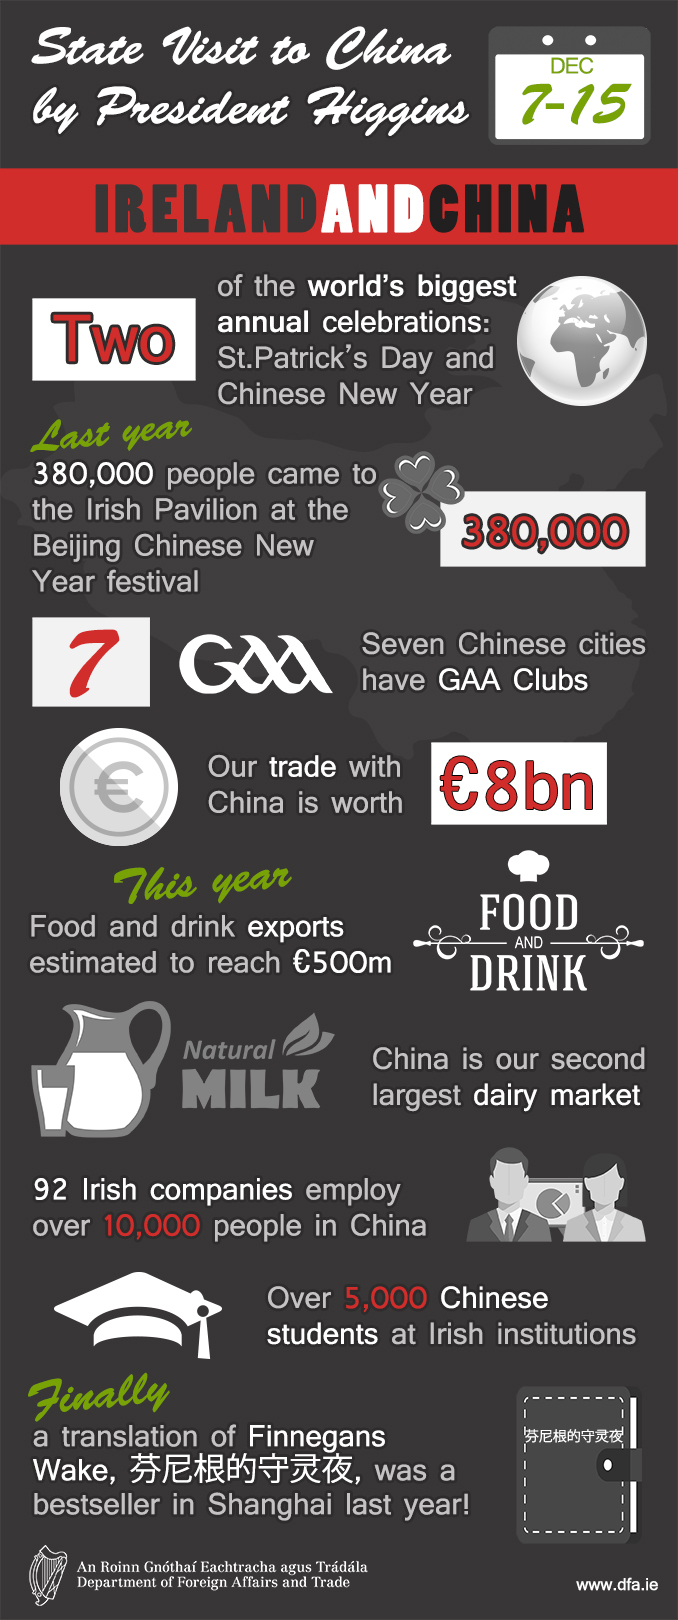 Ireland and China - State visit Infographic